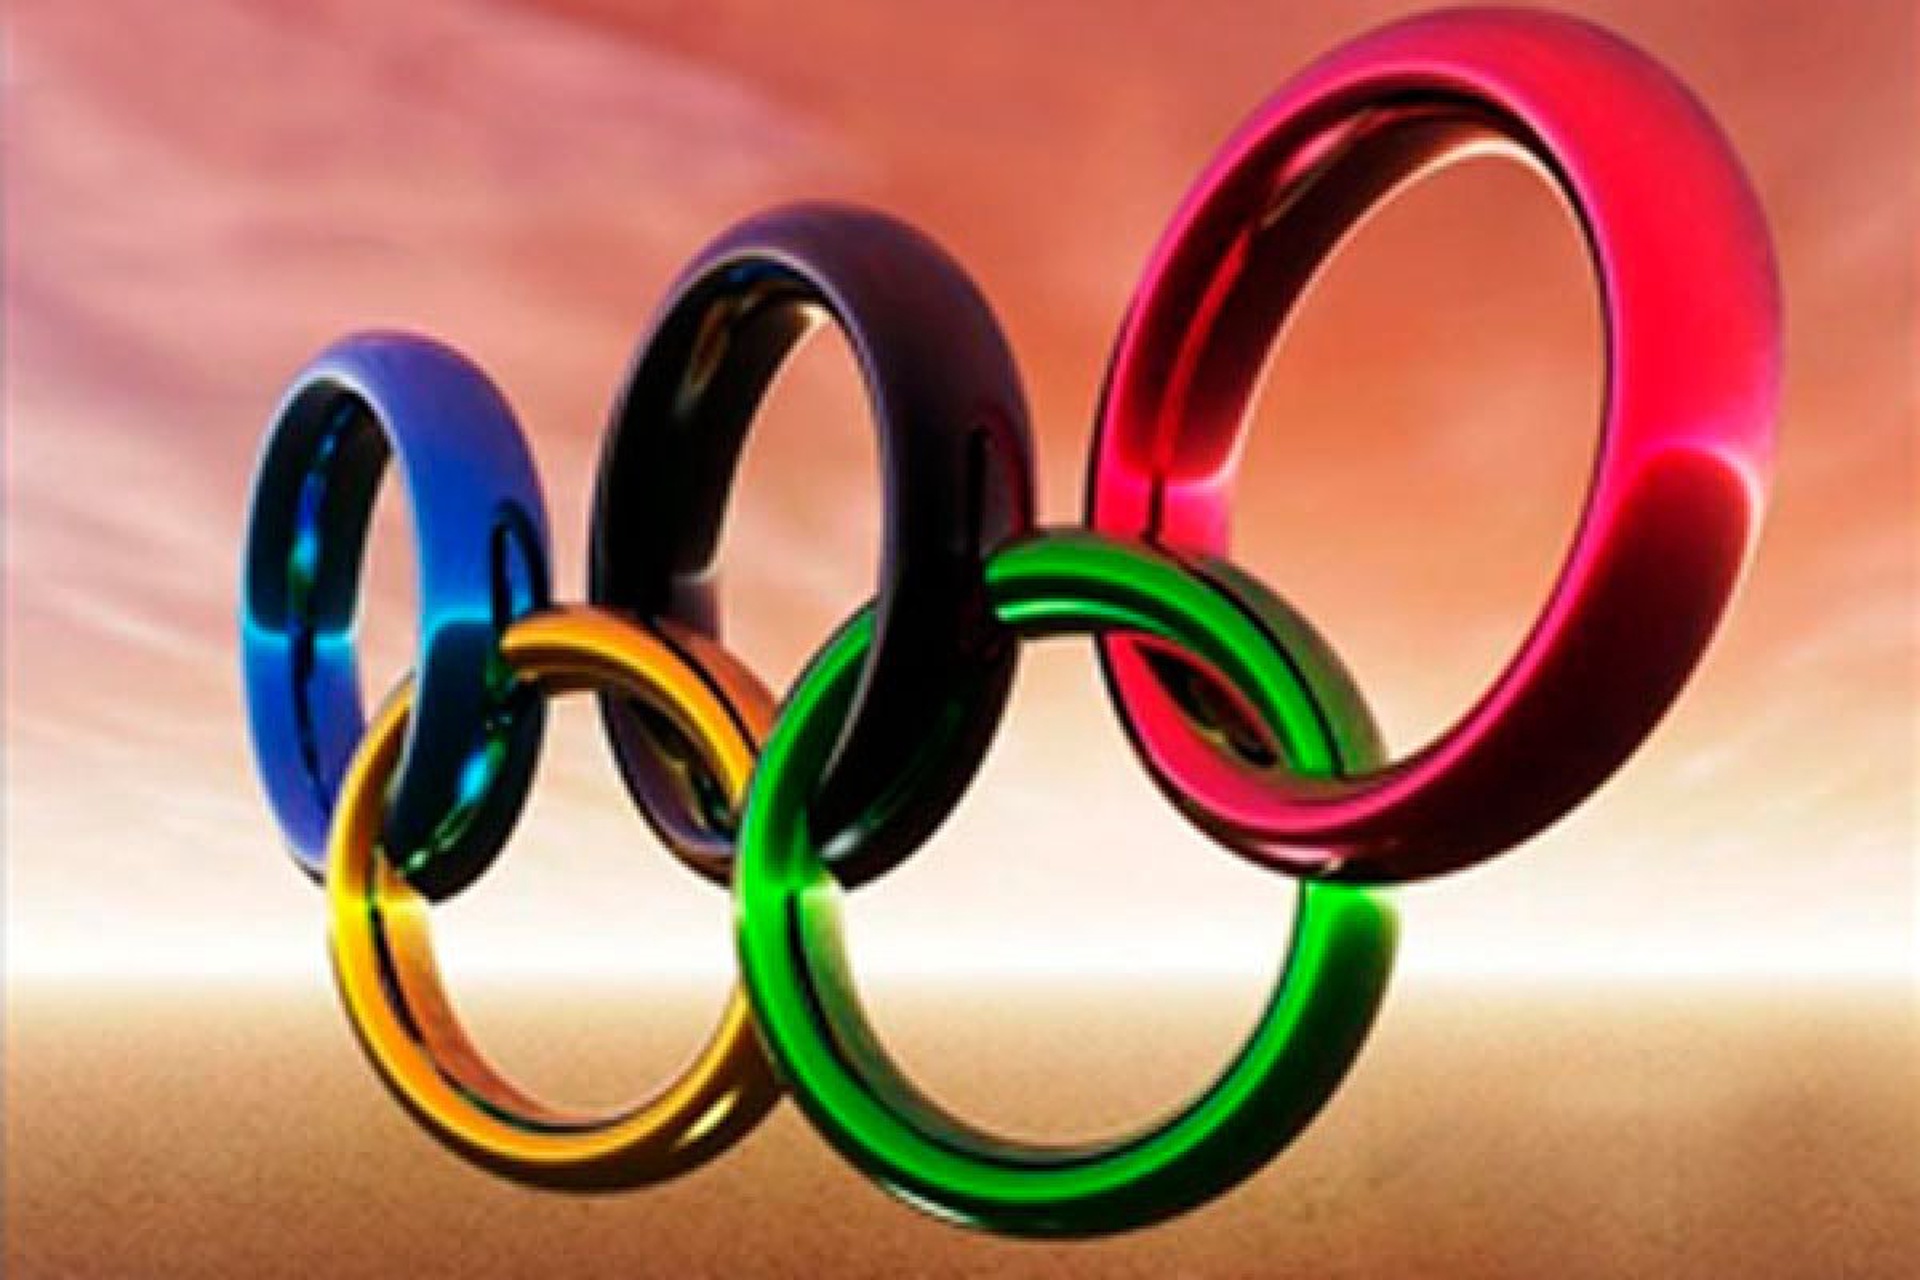 Ои 6. Олимпийские кольца. Кольца Олимпийских игр. Олимпийские кольца из шаров. Малые Олимпийские игры.